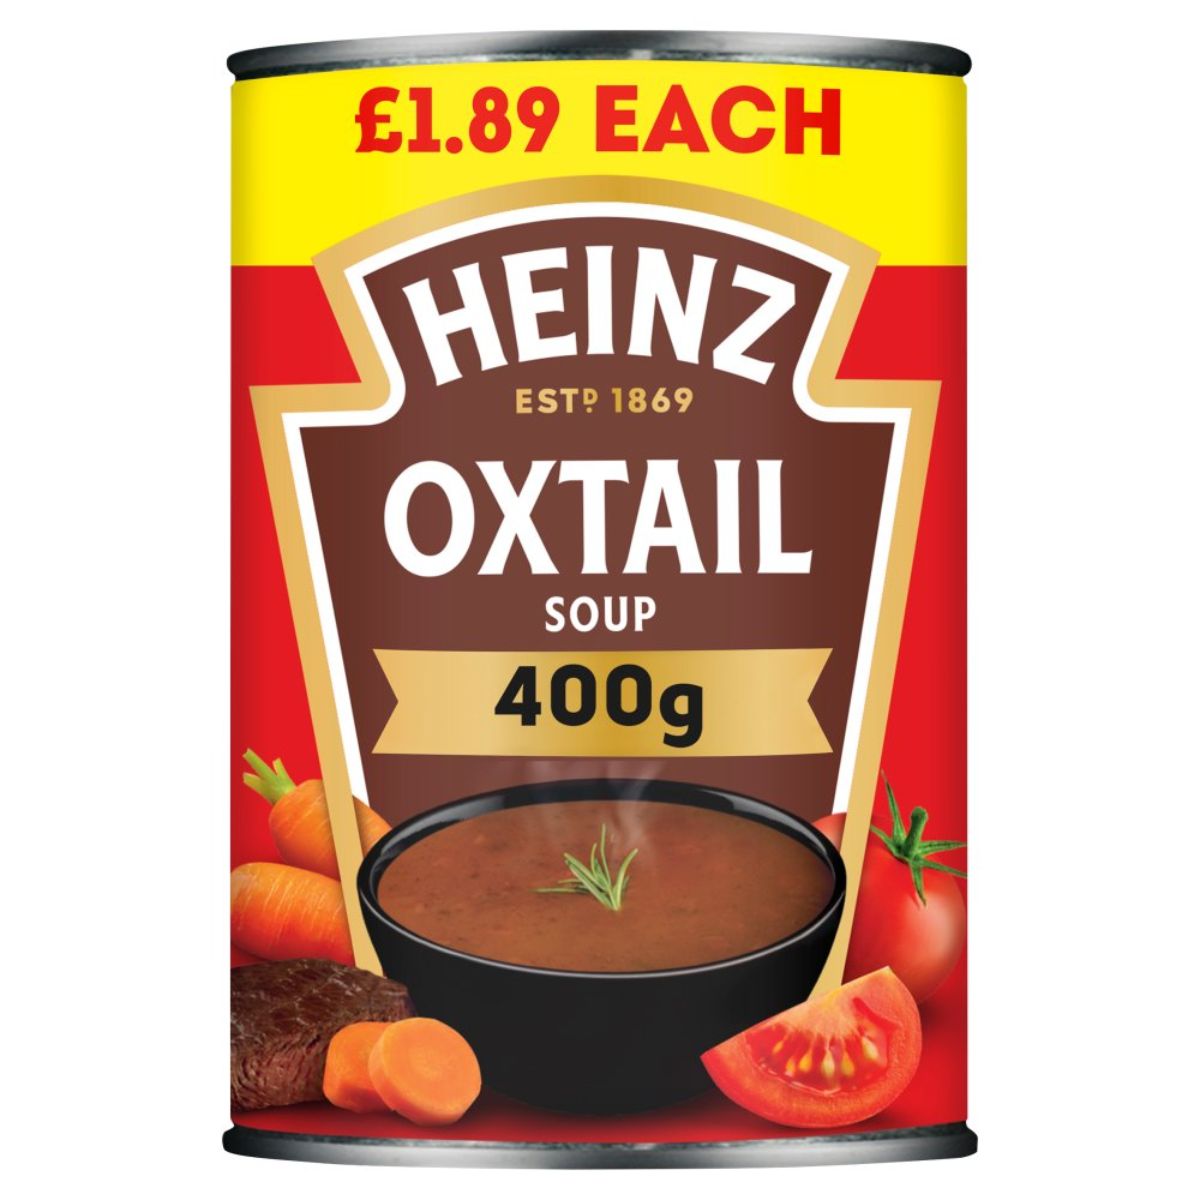 Heinz - Oxtail Soup - 400g.